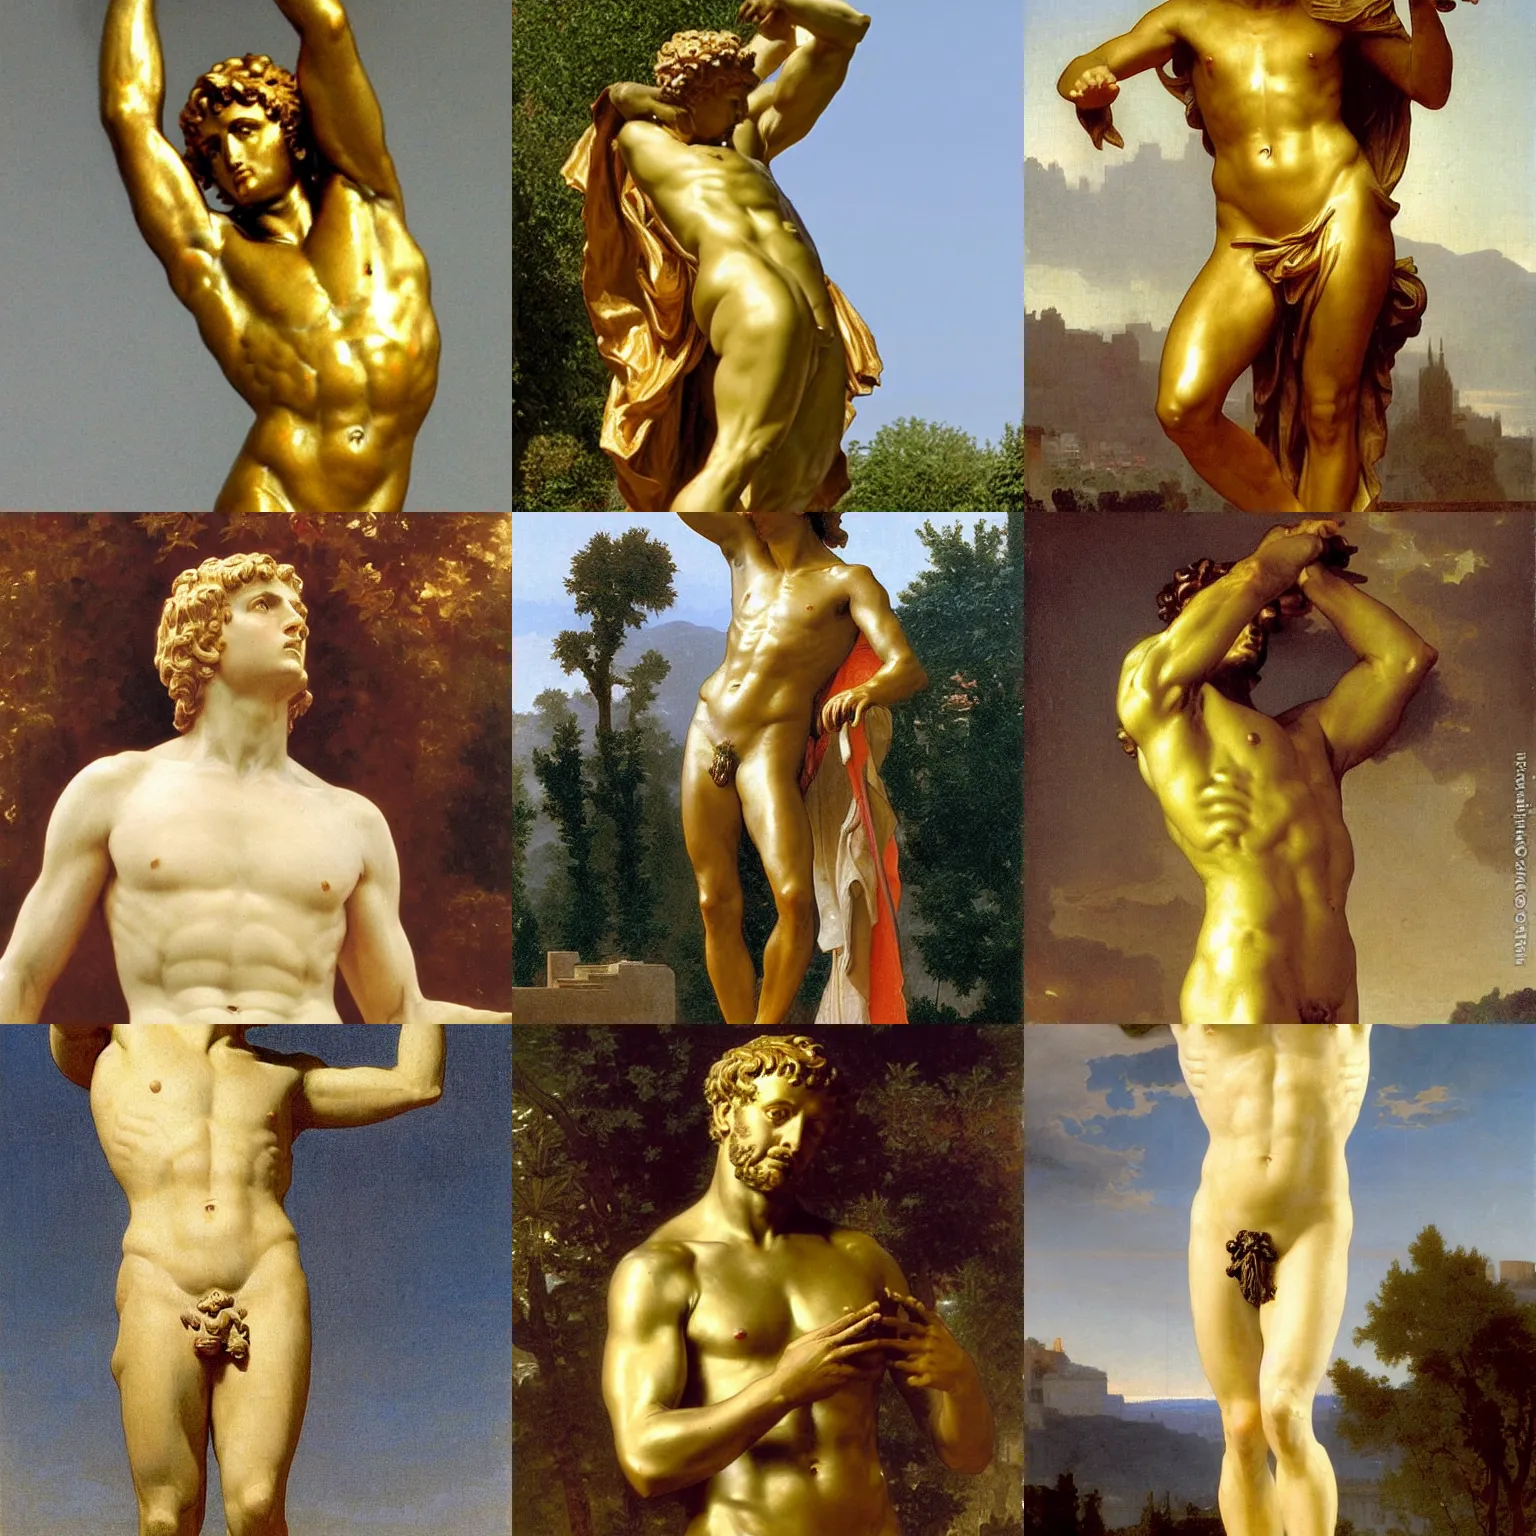 Prompt: golden roman statue of emmanuel macron, bouguereau